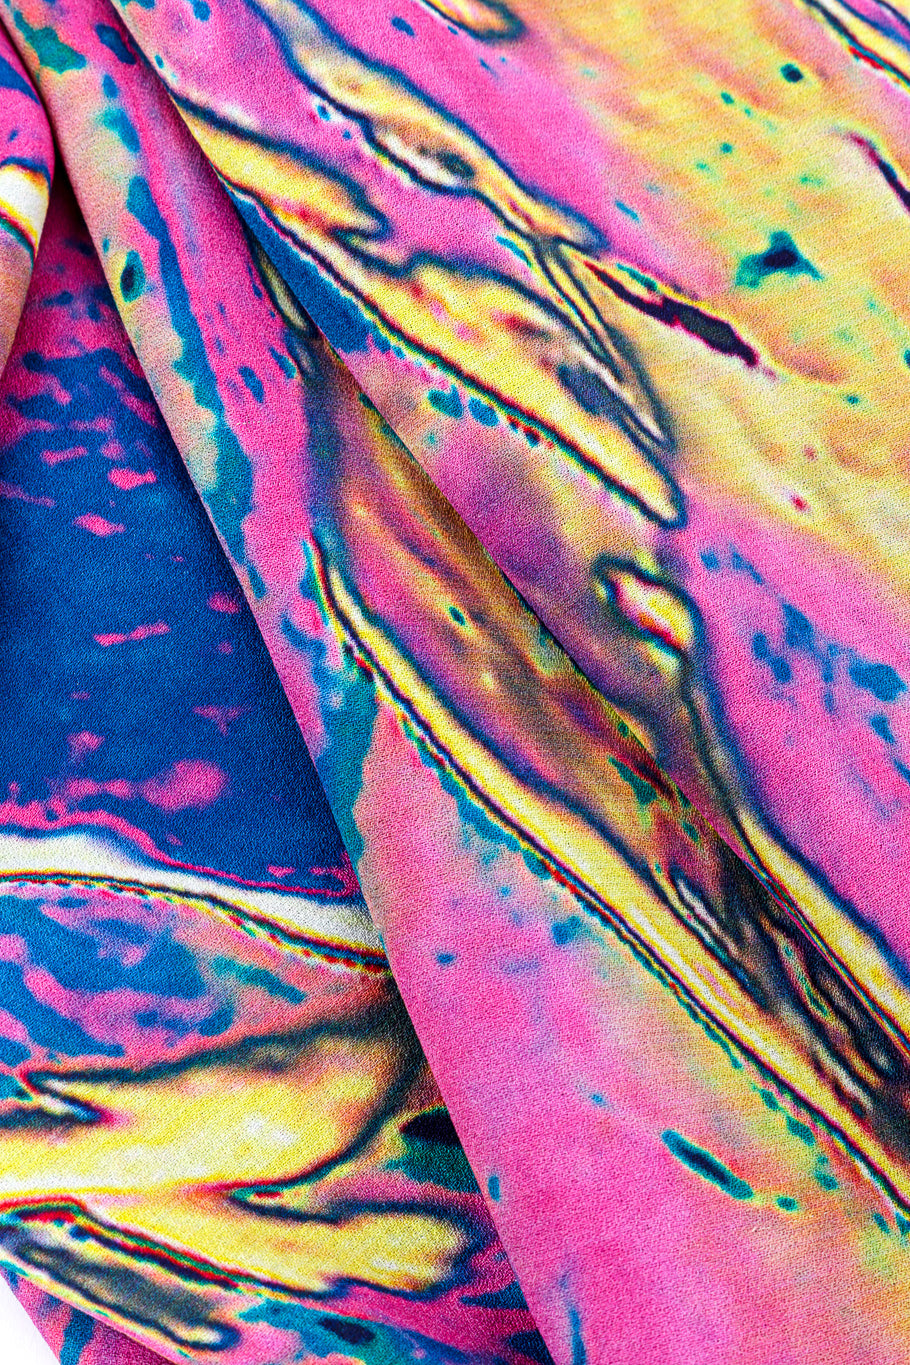 Vintage Carter Smith Abstract Splatter Print Caftan alternate fabric closeup @Recessla